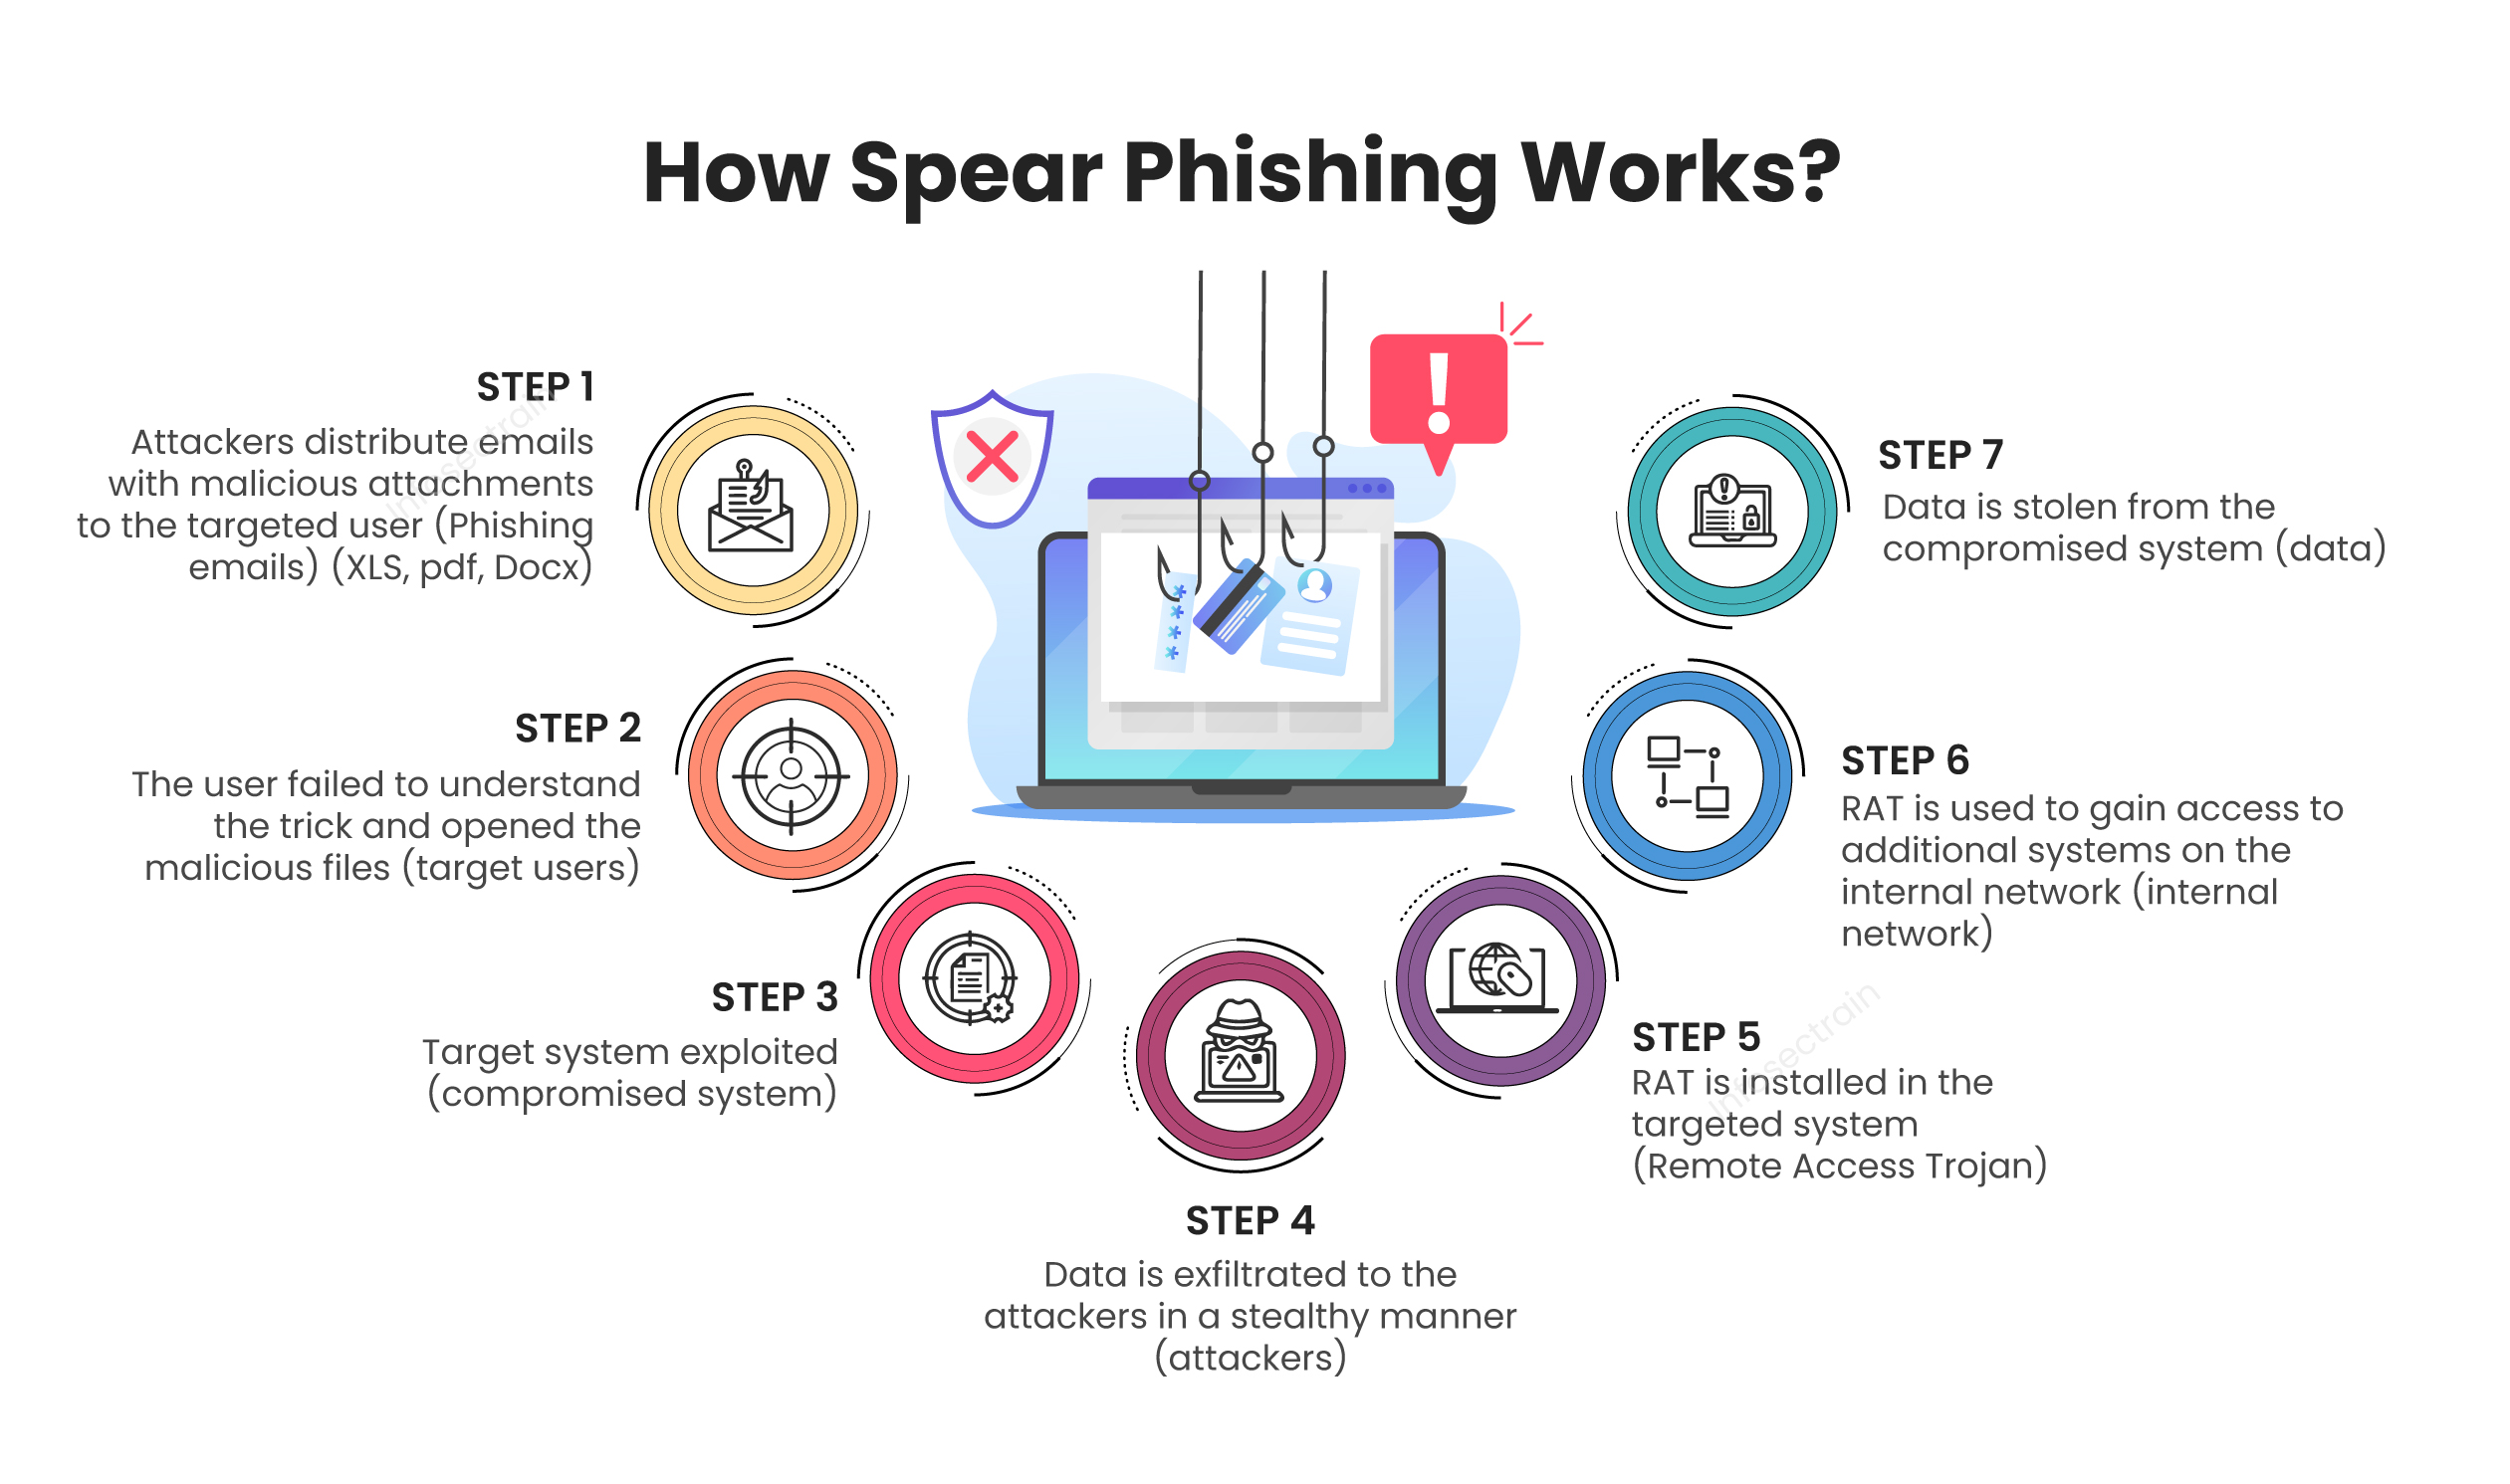 Spear-phishing attacks